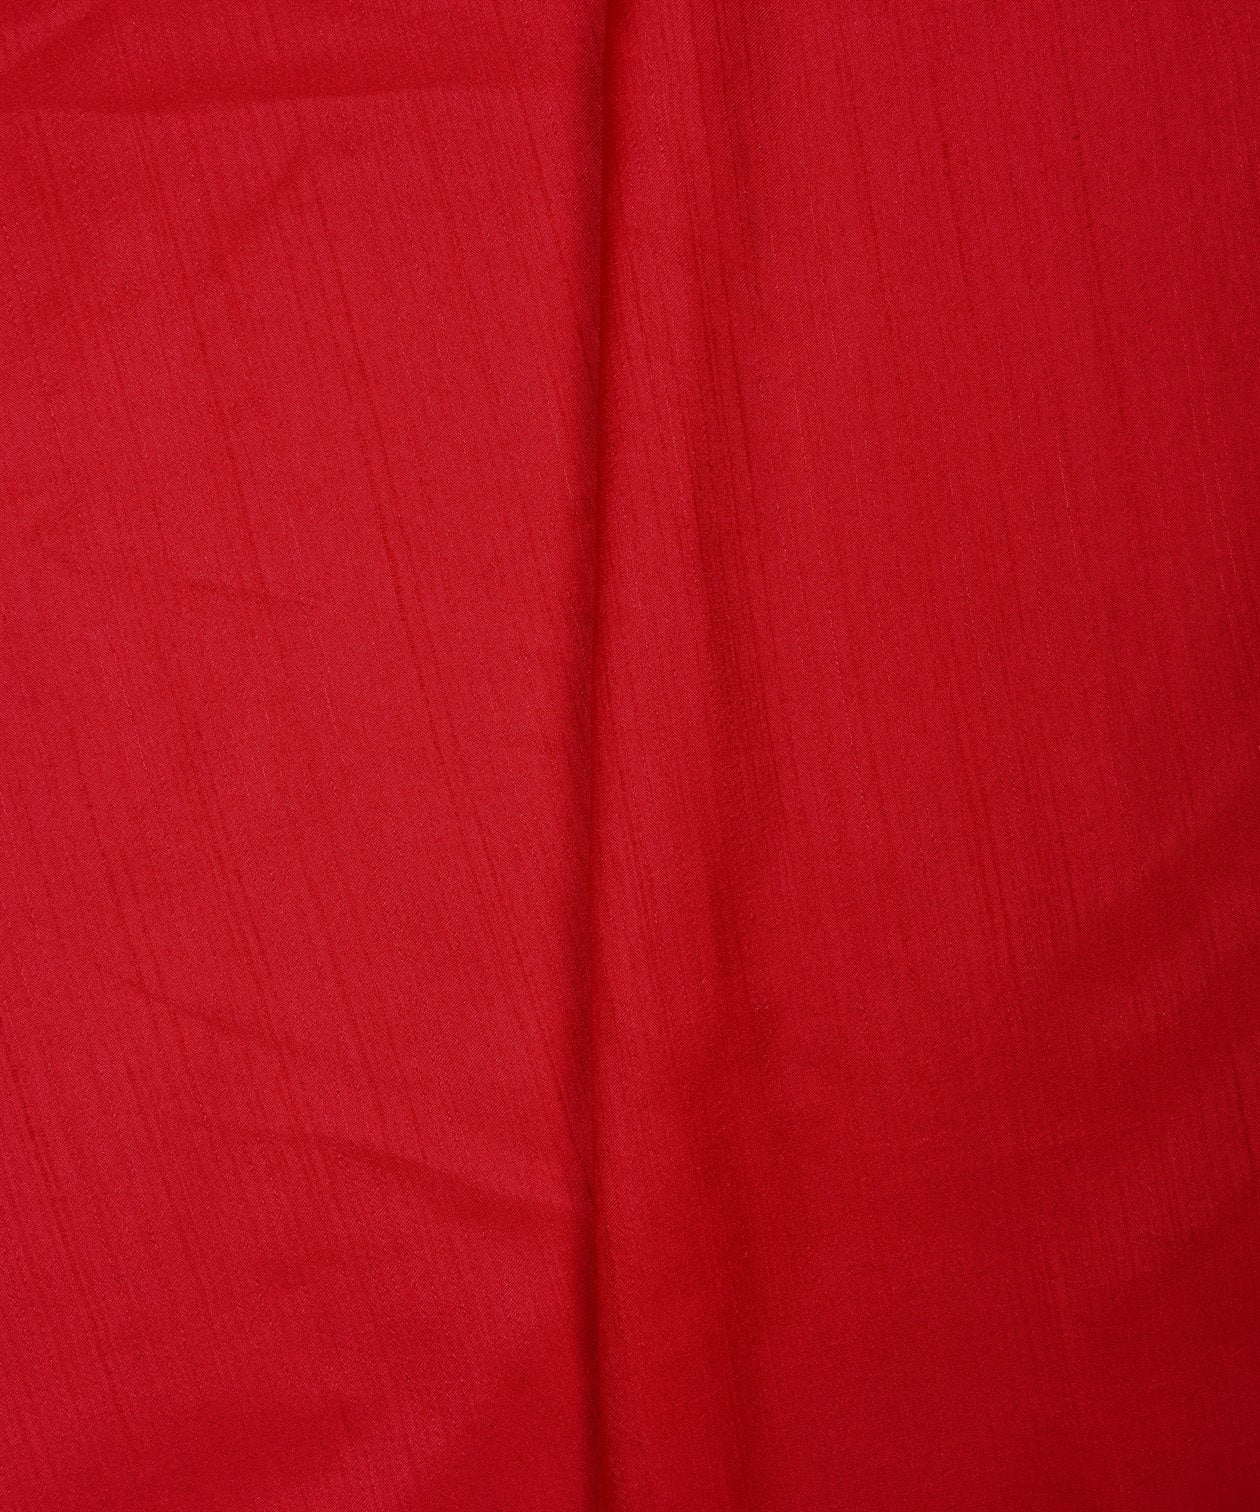 Red Plain Satin Georgette Slub Fabric